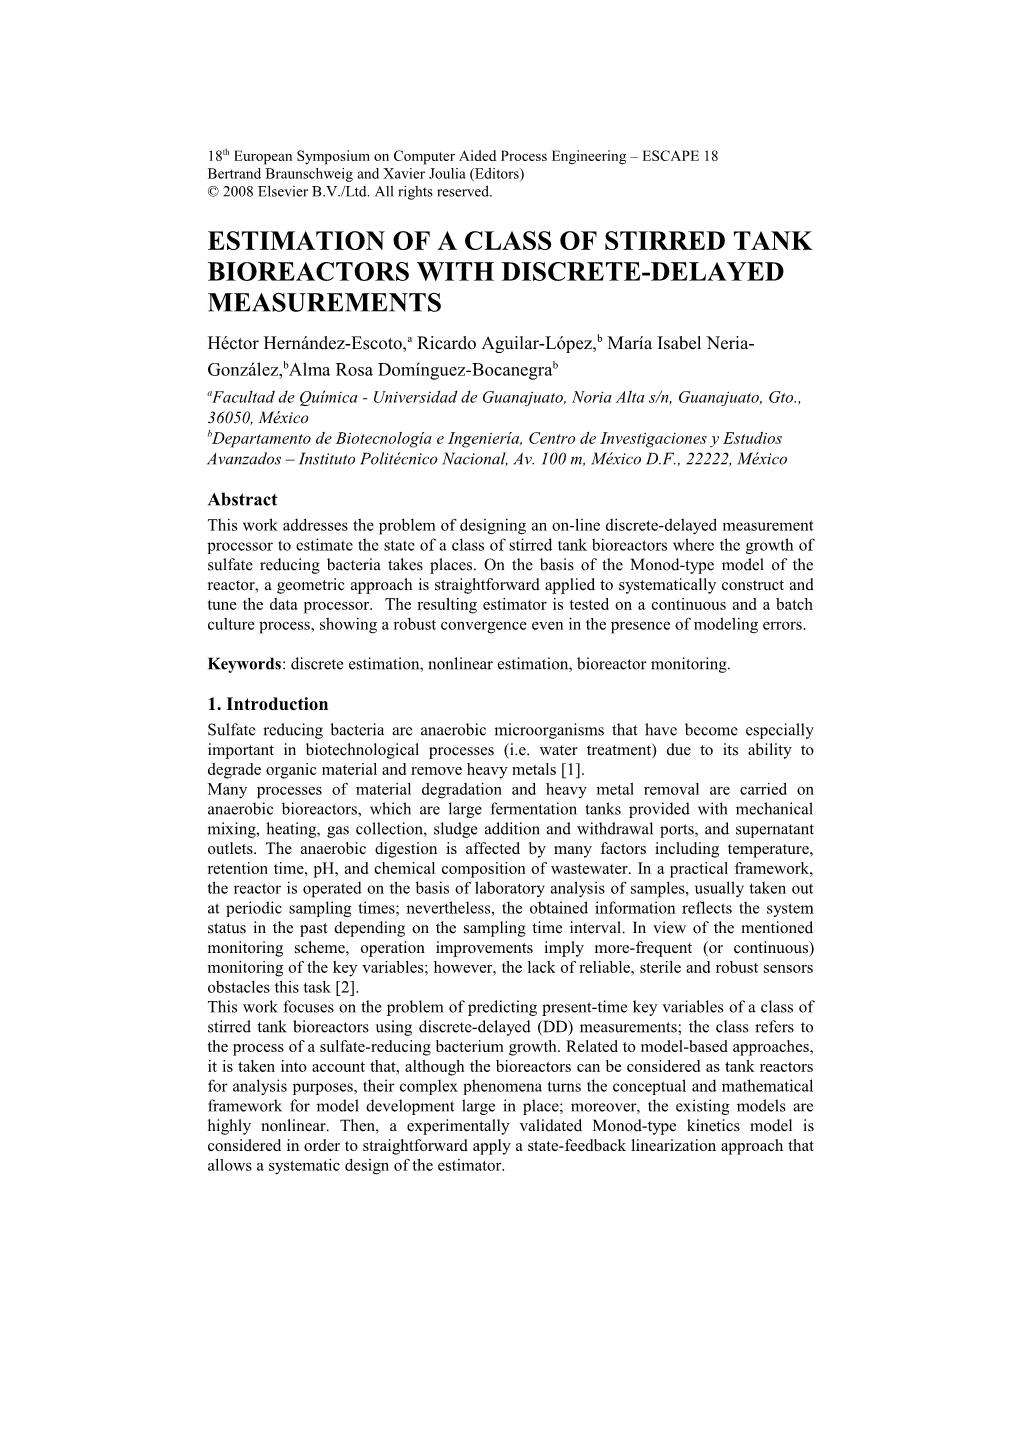 Estimation of a Class of Stirred Tank Bioreactors with Discrete-Delayed Measurements